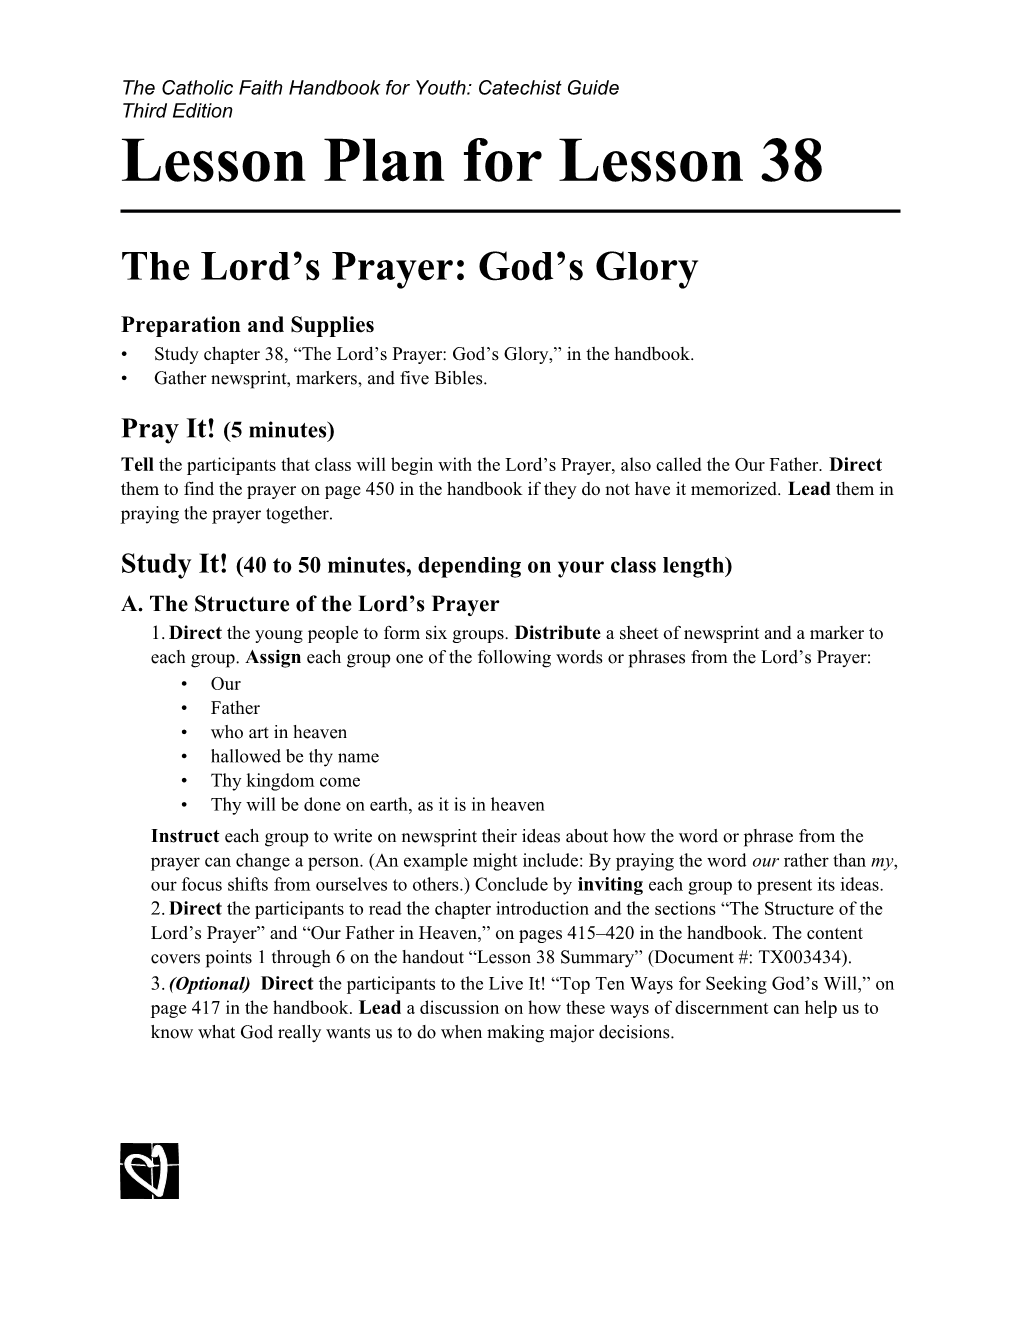 Lesson Plan for Lesson 38